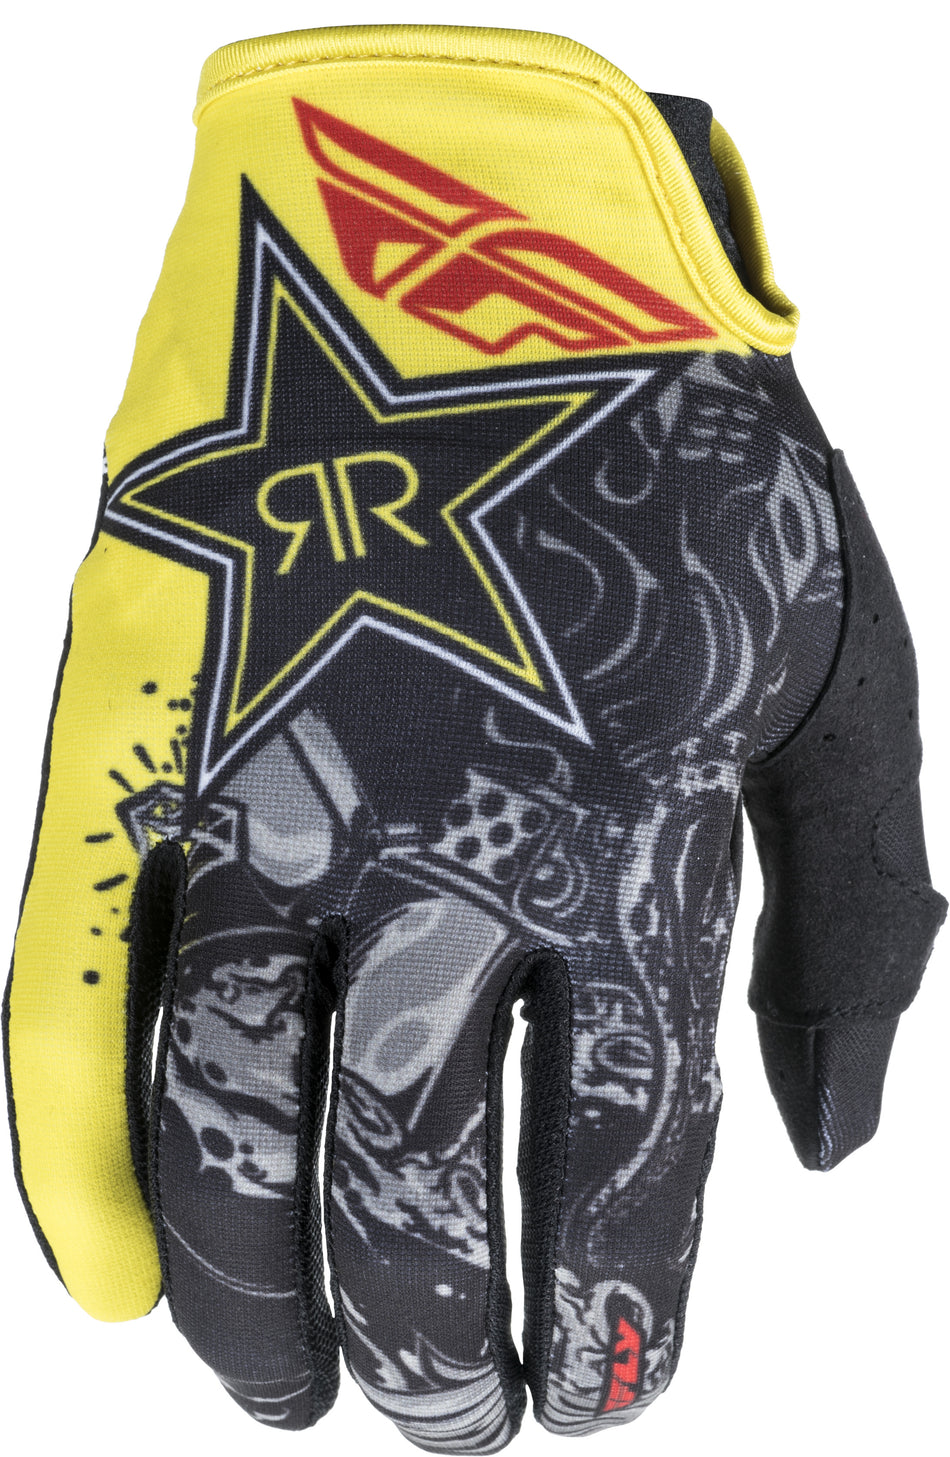 FLY RACING Lite Rockstar Gloves Black/Yellow Sz 7 371-01907